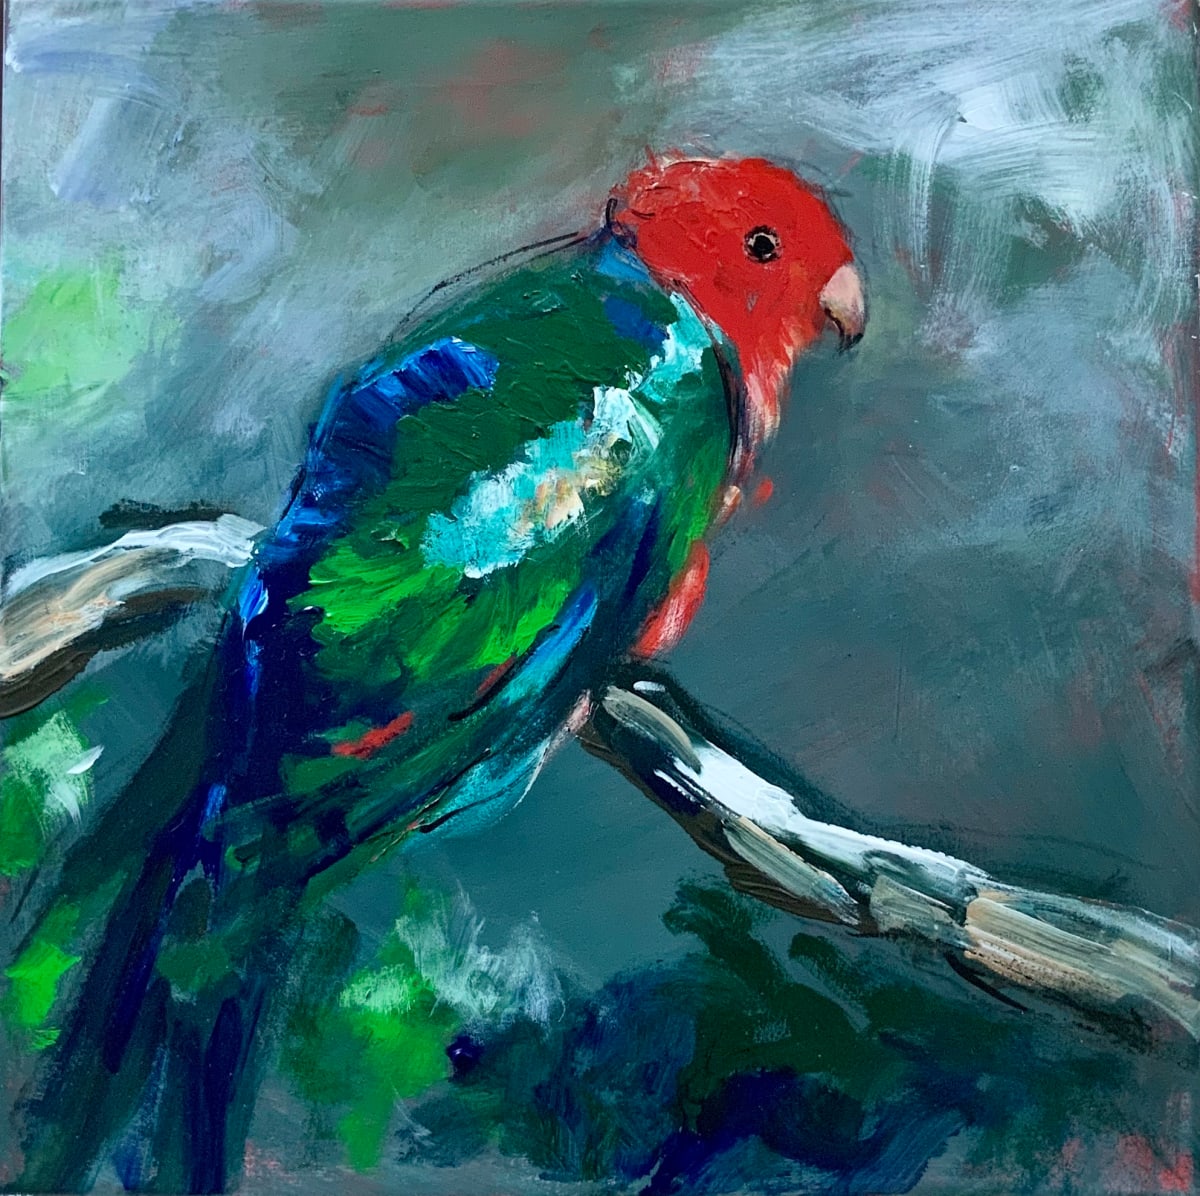 King Parrot 